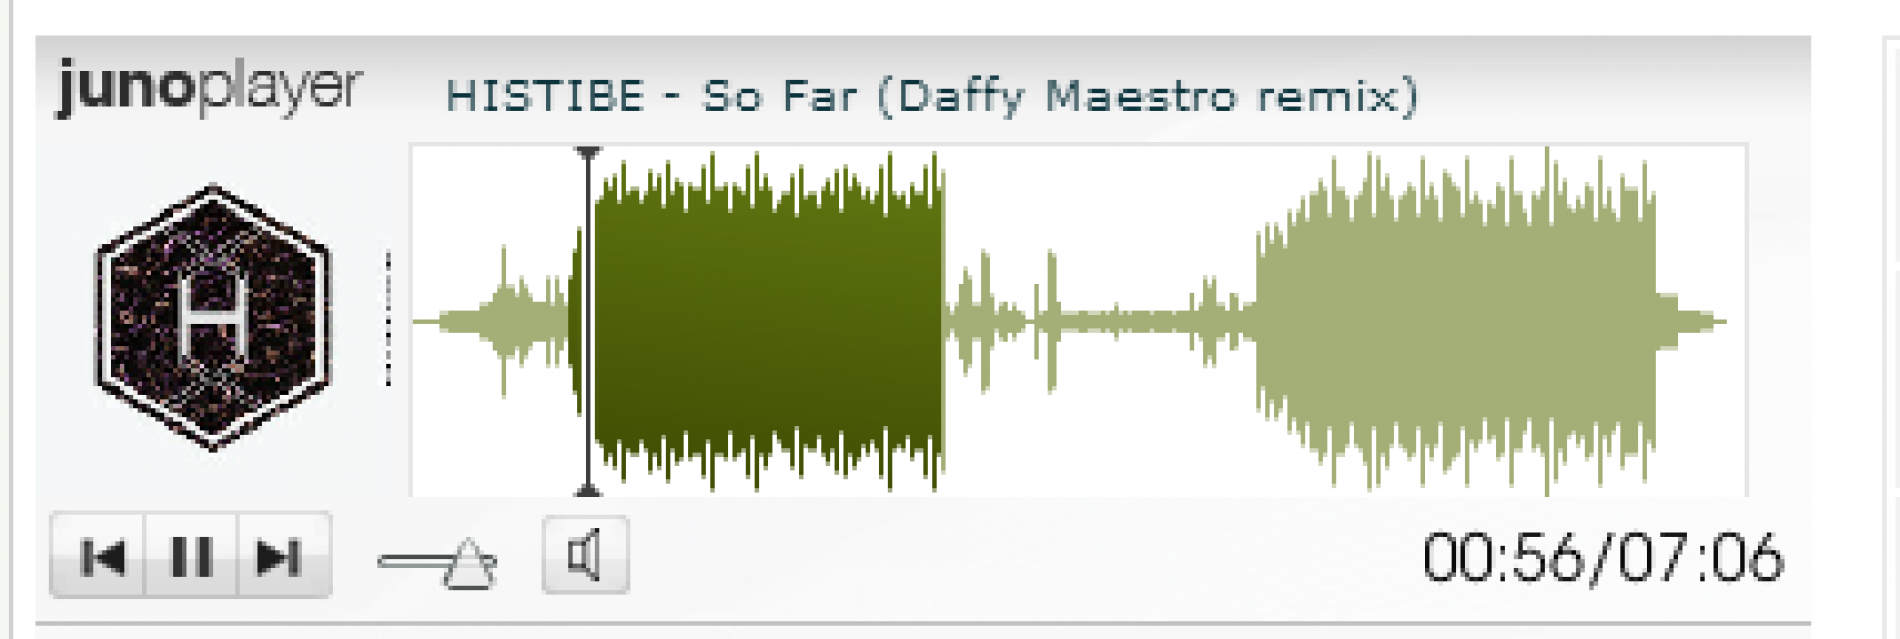 Daffy Maestro Remixes Histibe